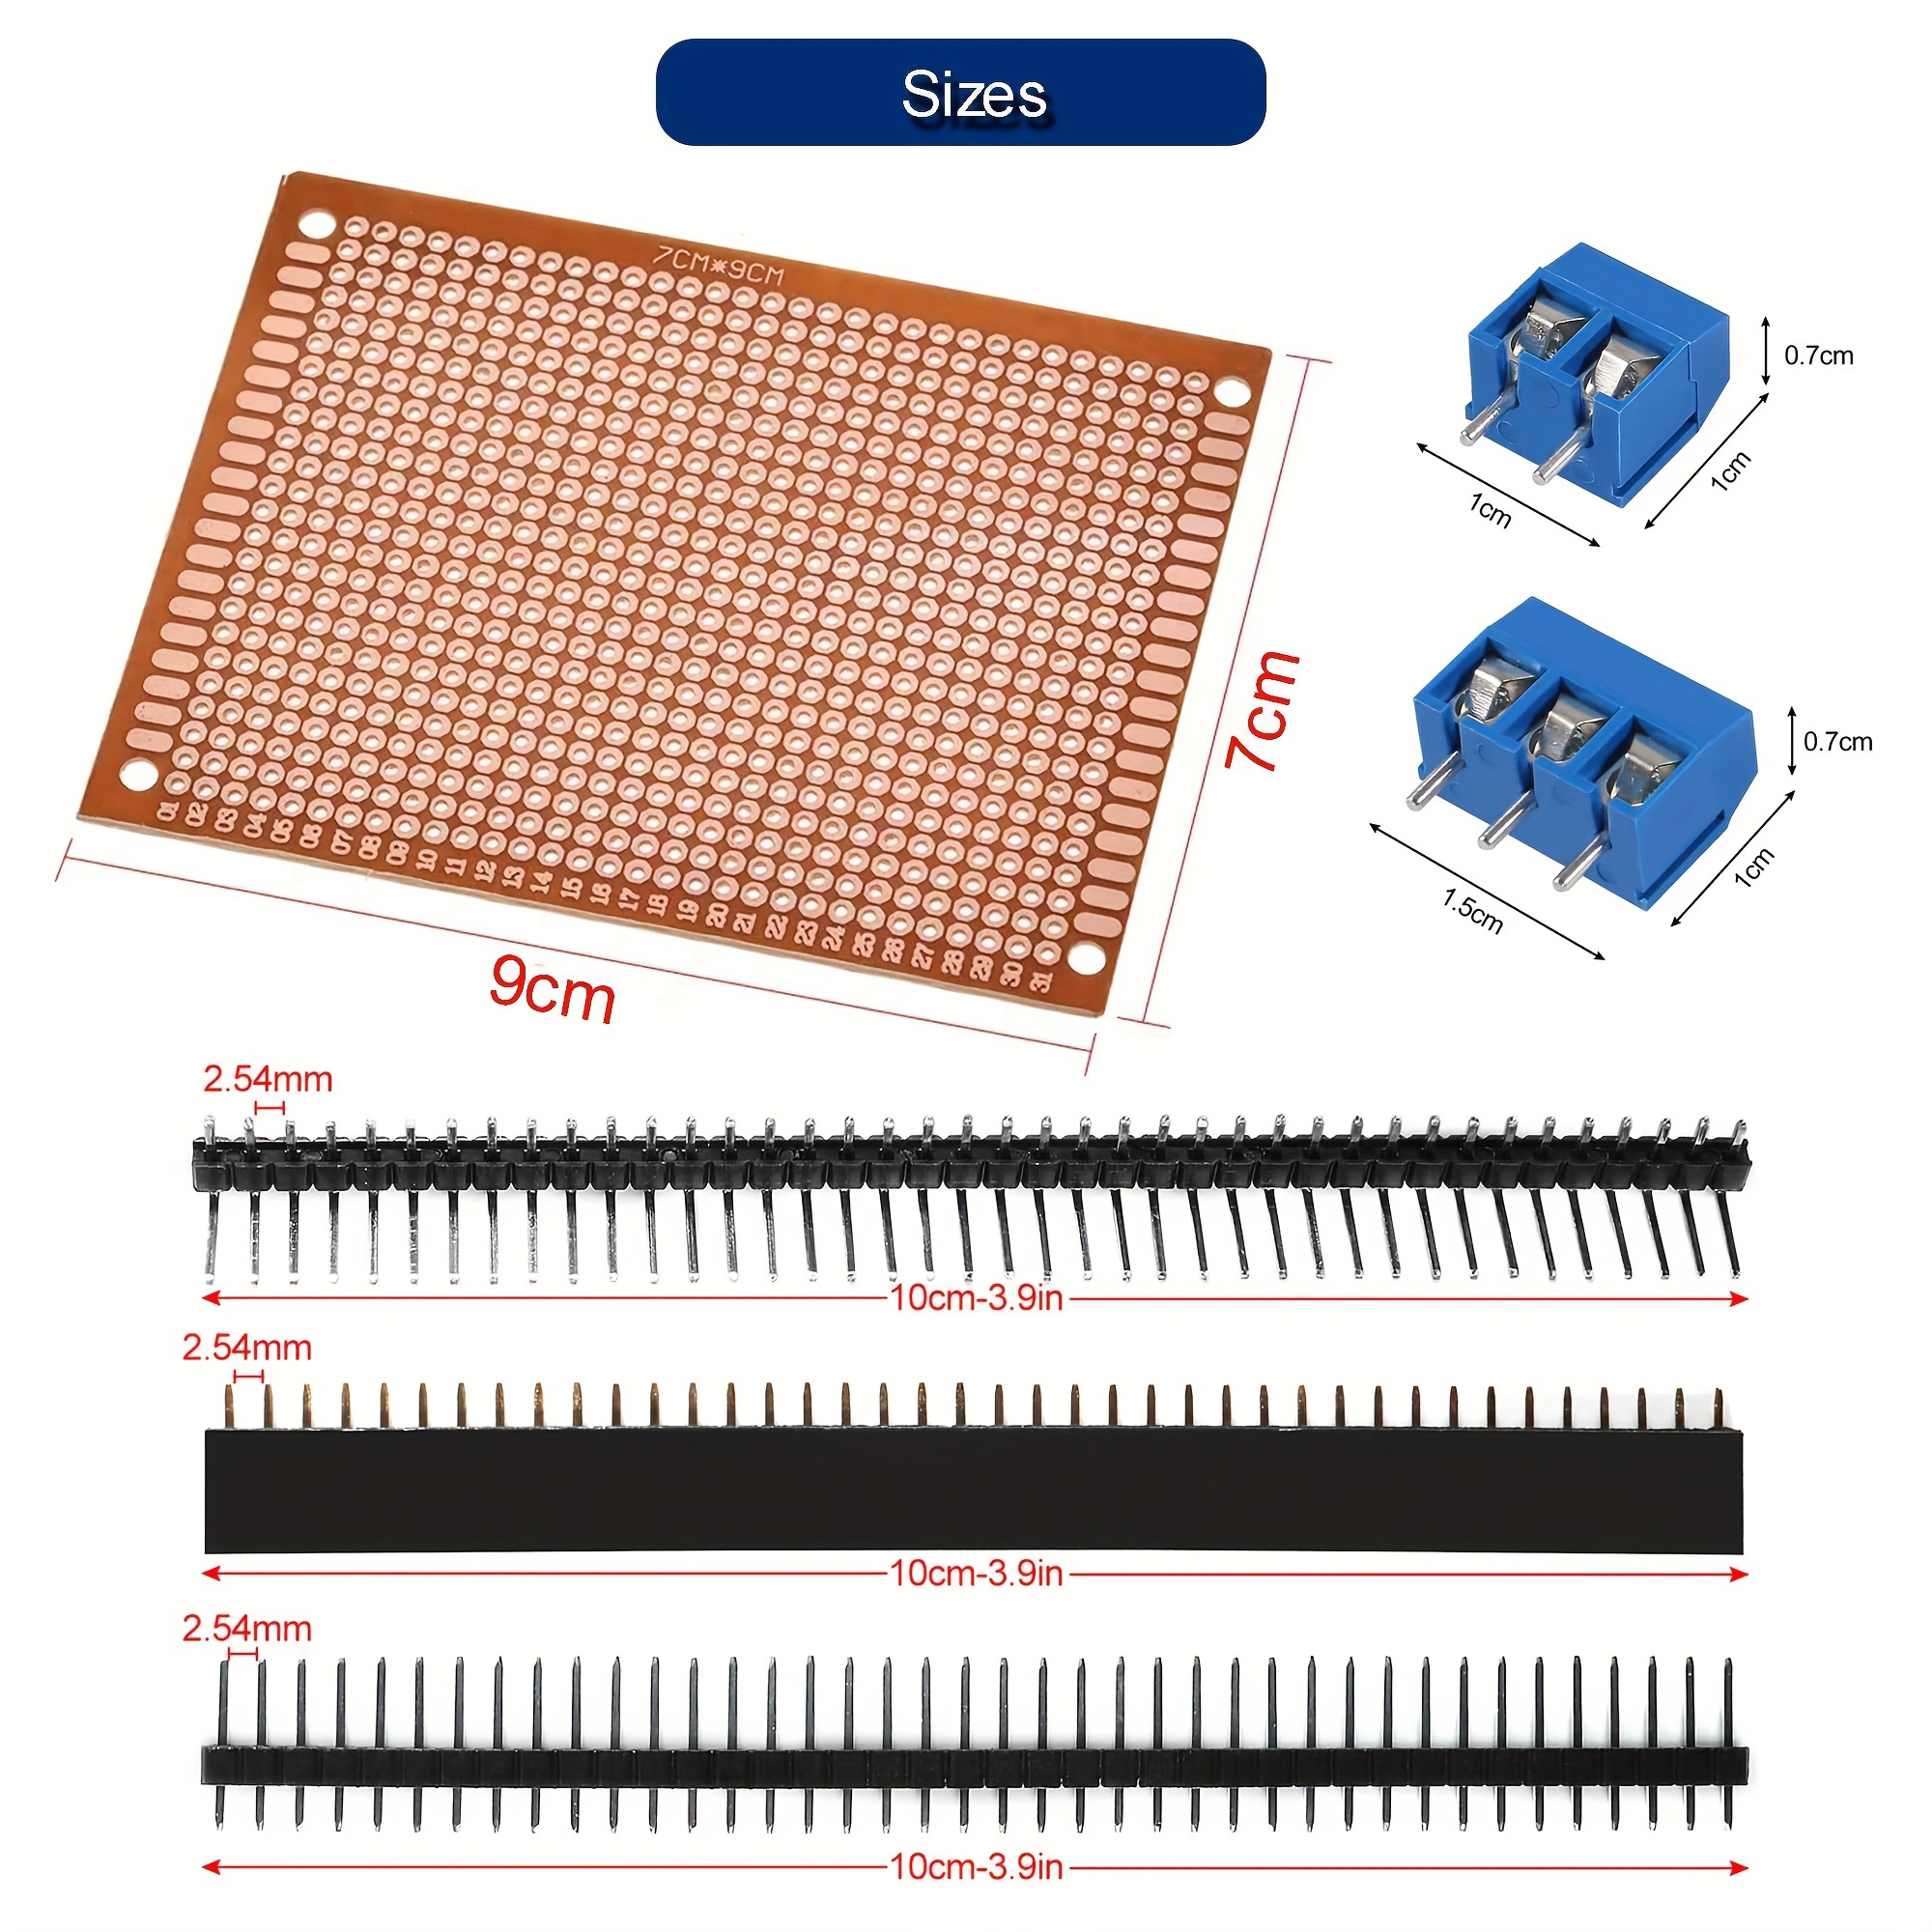 Single Side Universal Pcb Board Kit Tin Plate Pitch Circuit - Temu